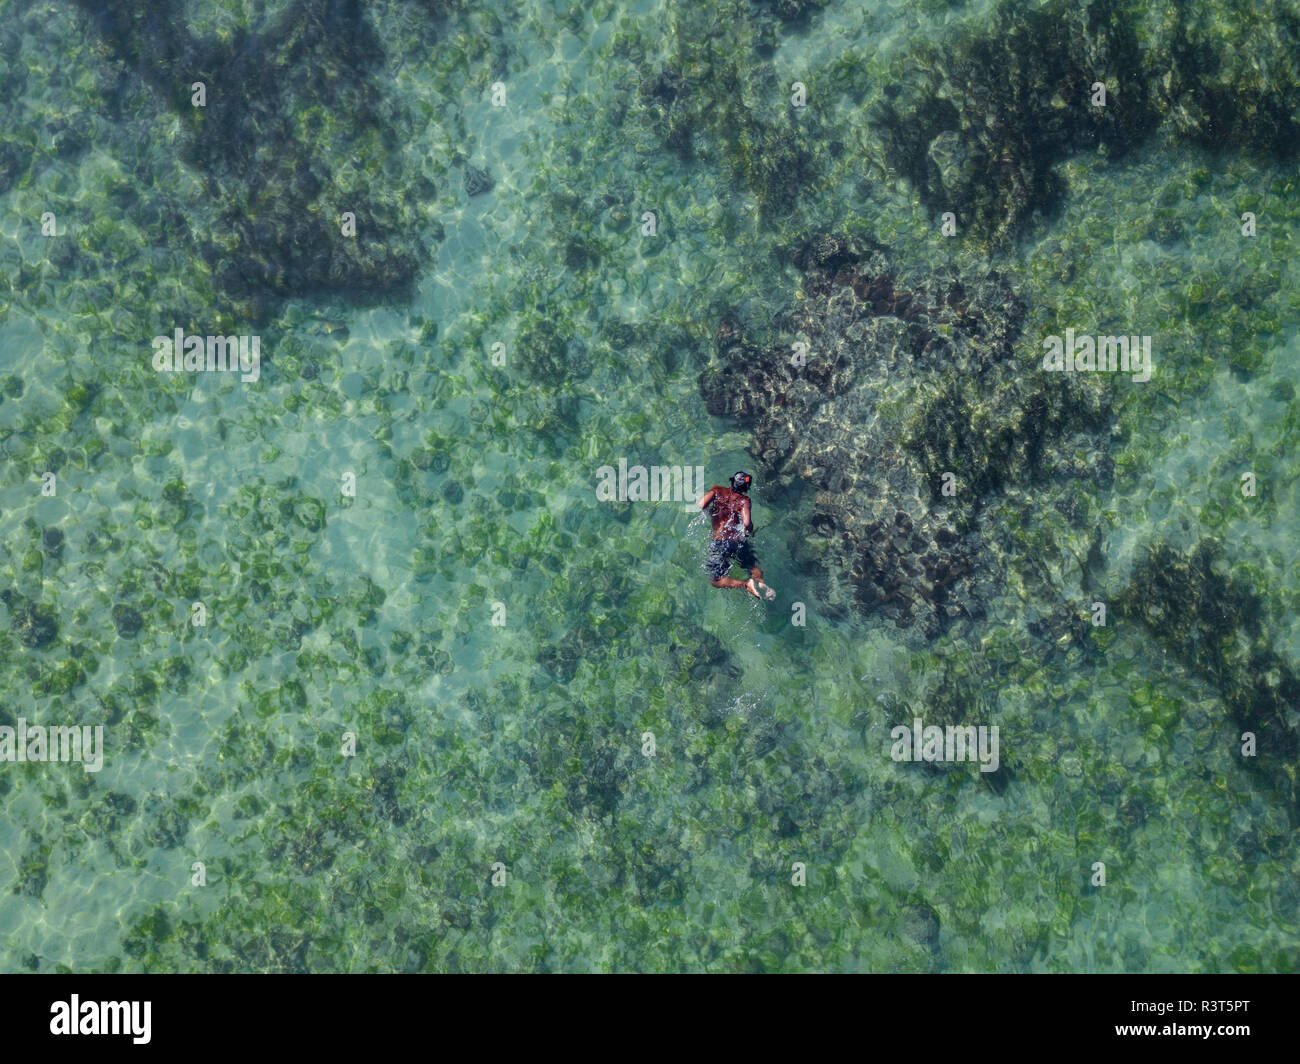 Indonesia, Bali, vista aerea di snorkeler Foto Stock